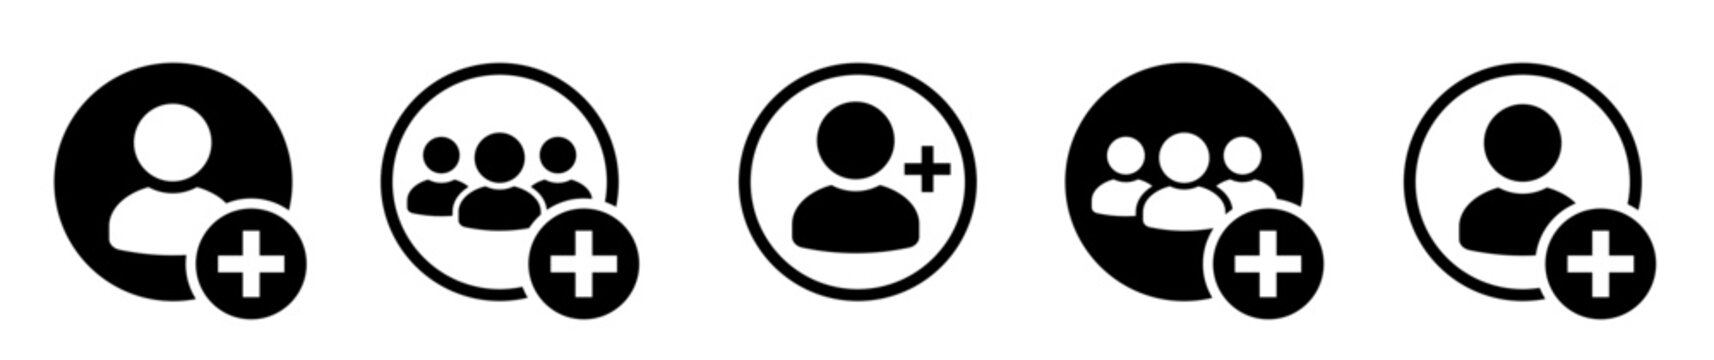 Add new user icon set. Person profile avatar with plus. Add user profile icon. Male person profile avatar in black colors. Vector illustration.